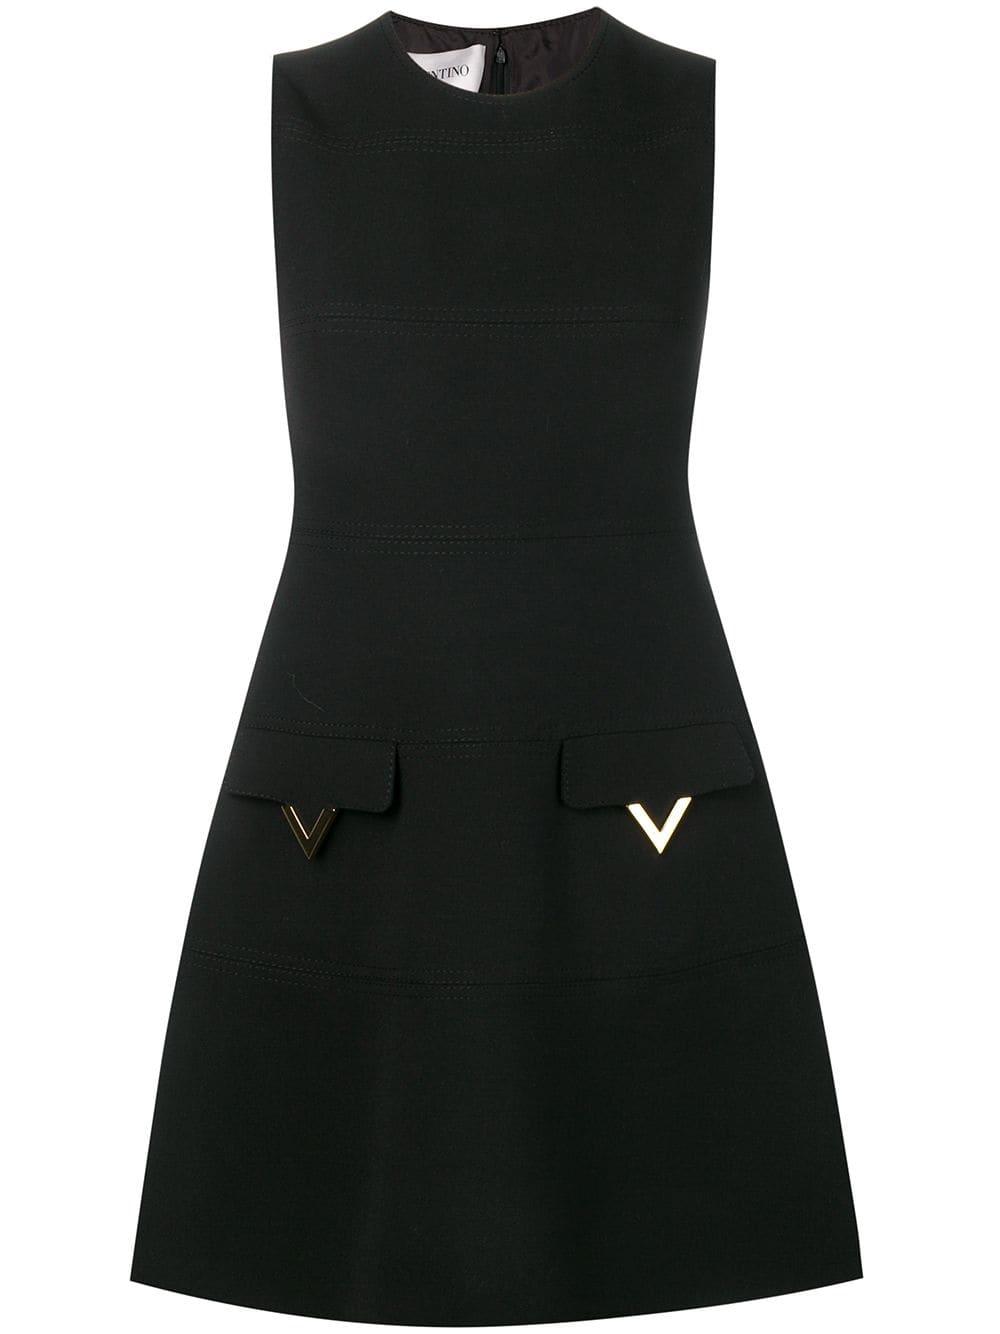 Valentino V Pocket Dress in Black | Lyst